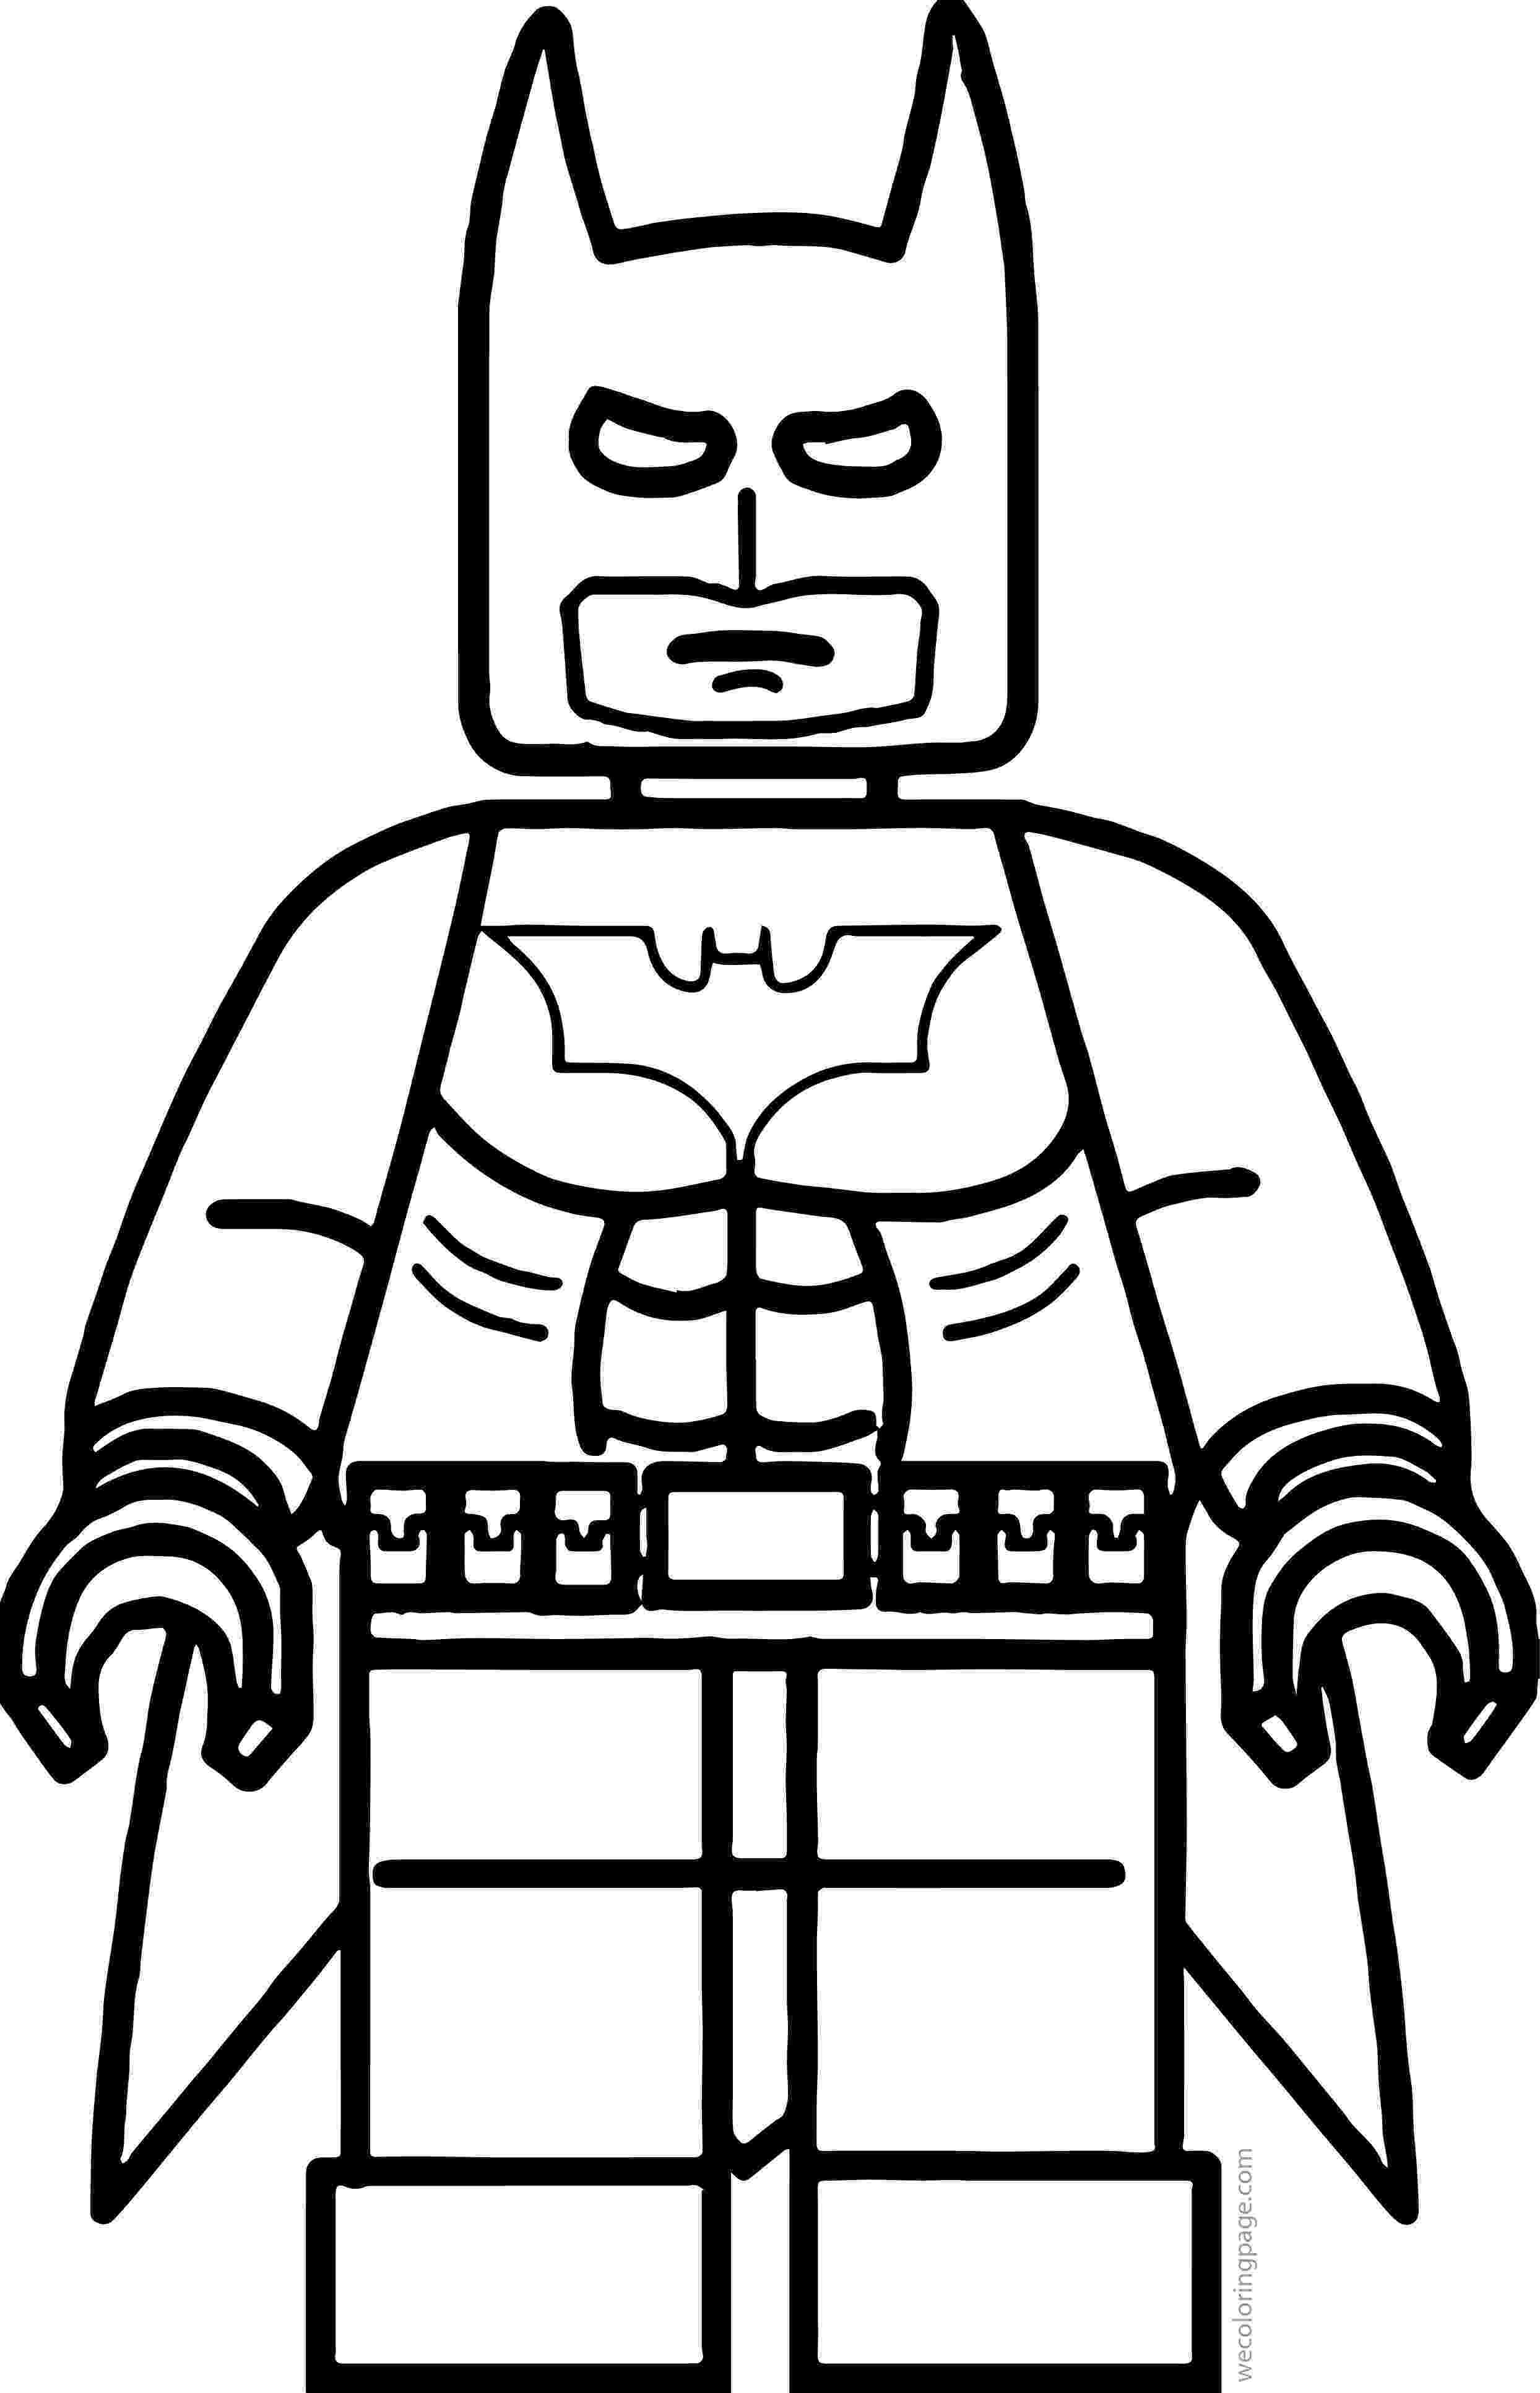 printable lego batman coloring pages lego batman coloring pages best coloring pages for kids coloring printable pages batman lego 